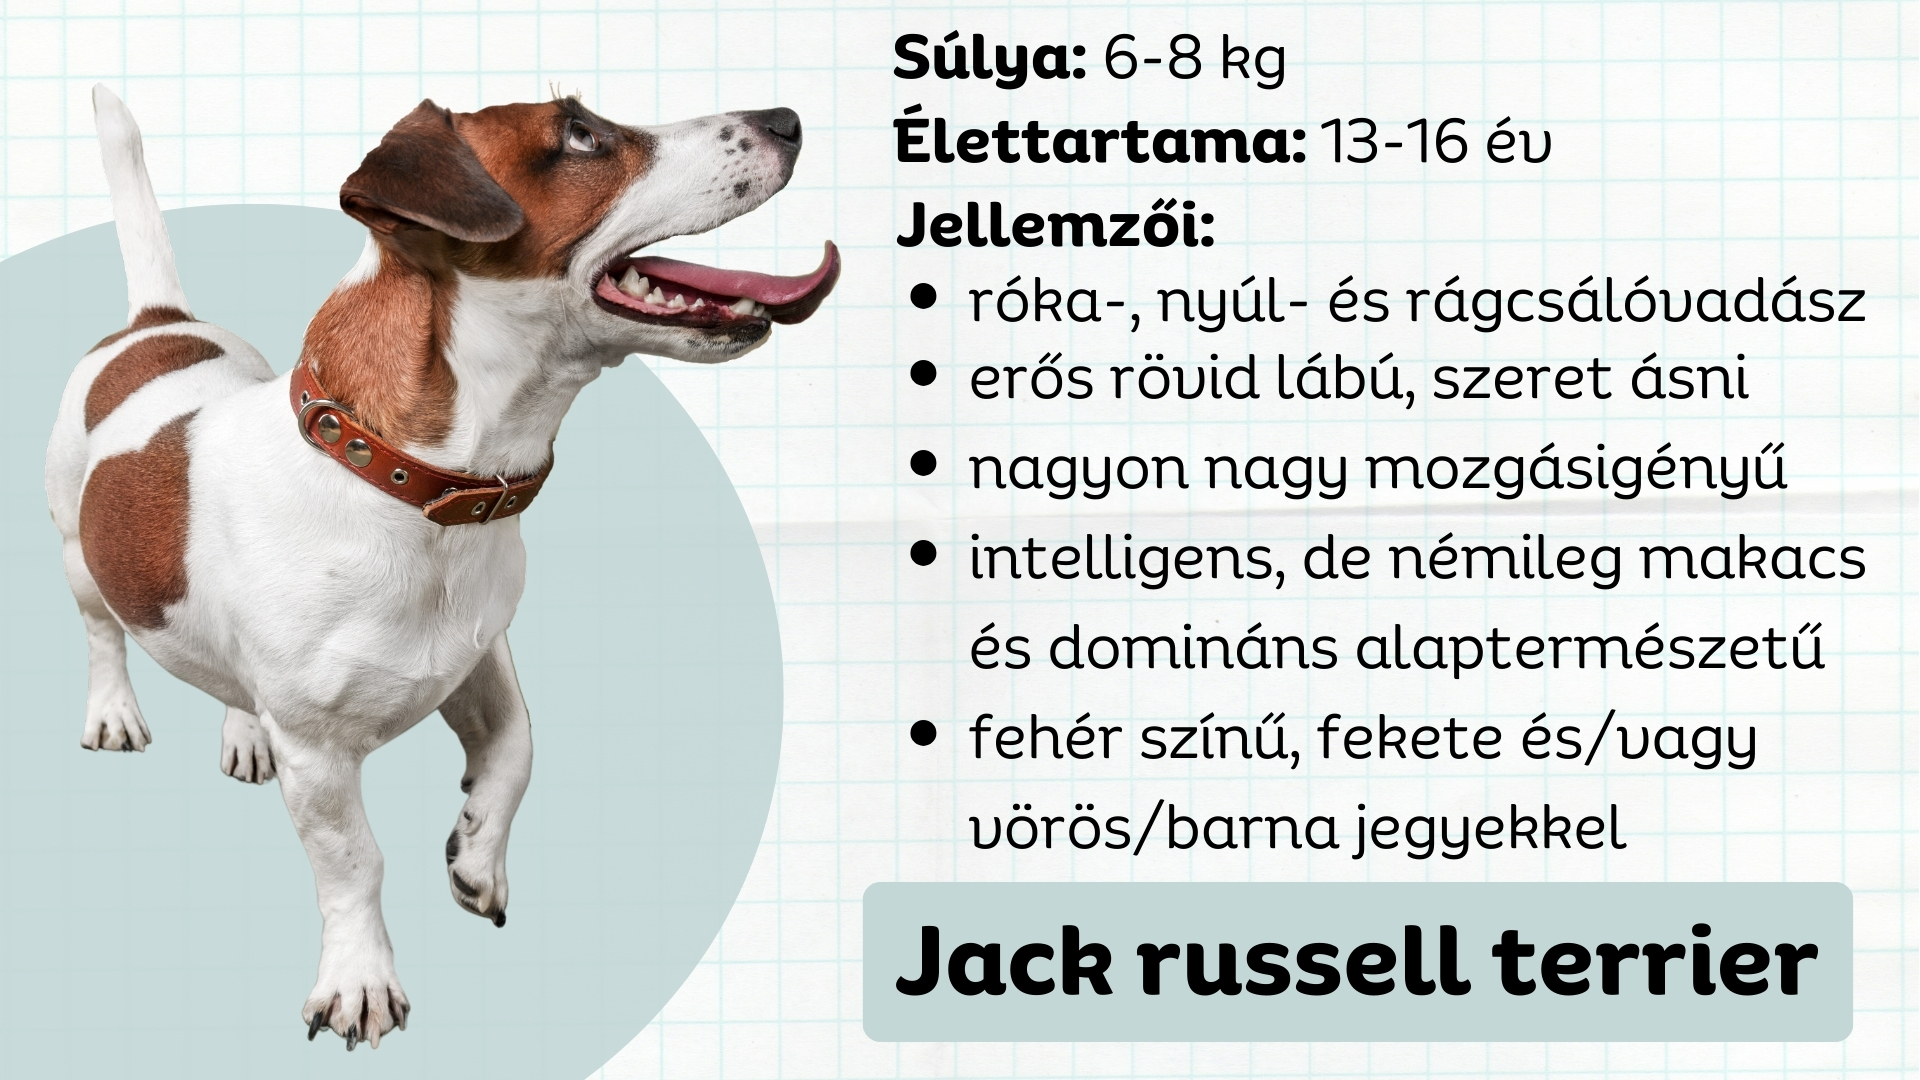 Jack russell terrier jellemzői